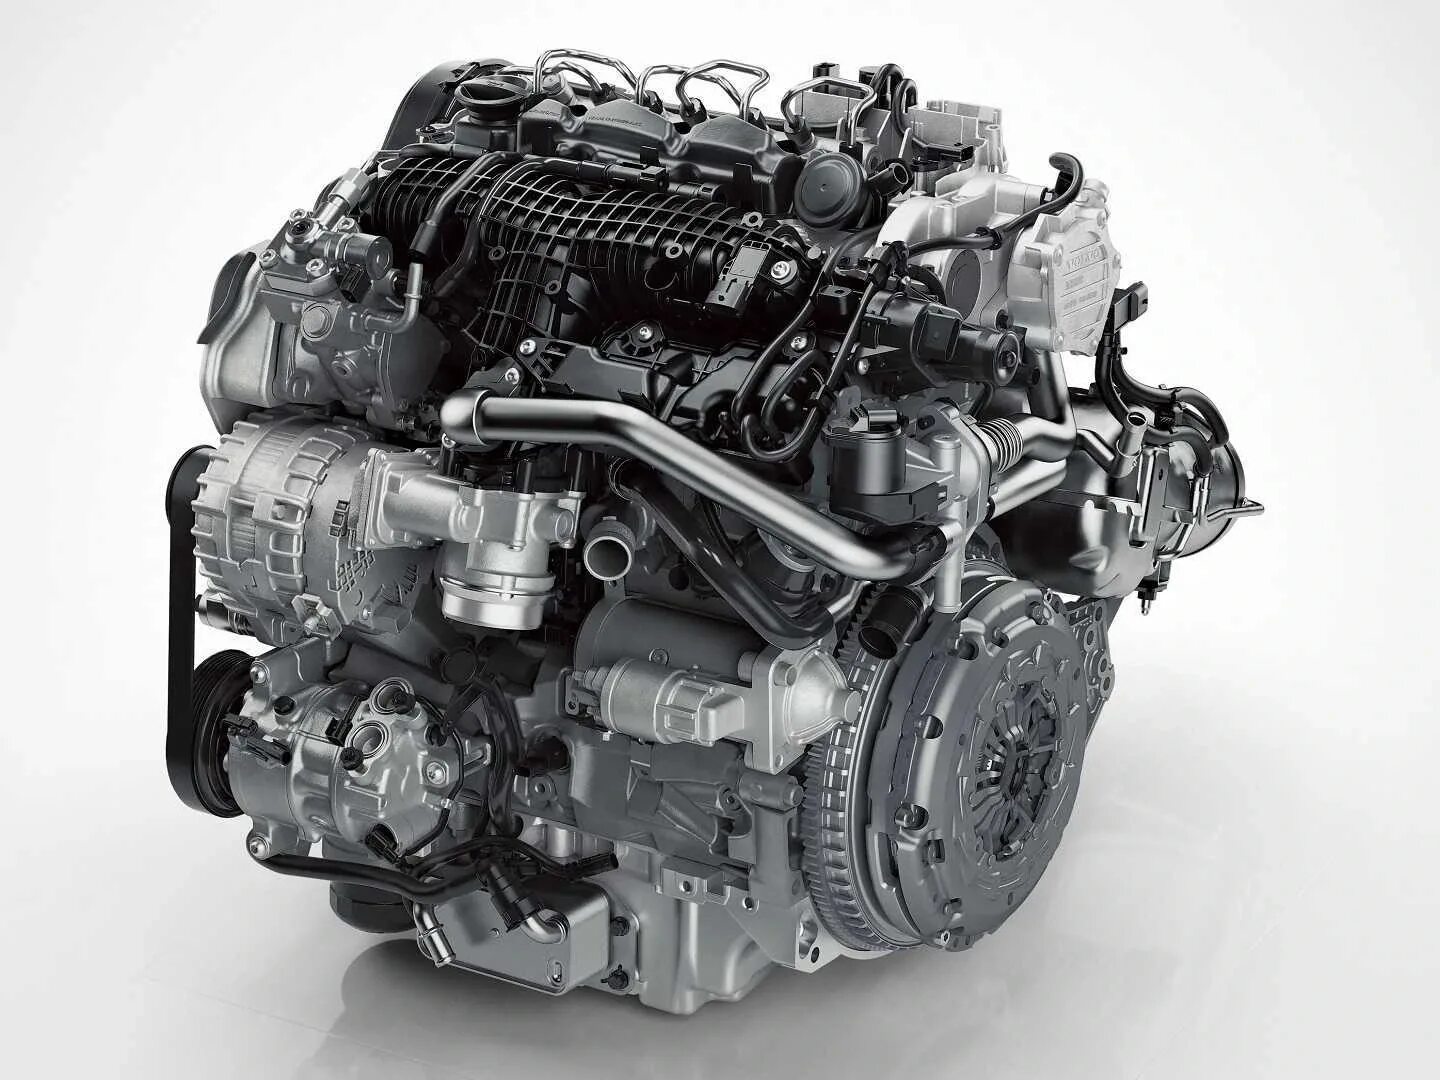 D3 d5. Volvo t5 двигатель. ДВС Volvo t5. Двигатель Volvo дизель d5. Volvo t5 двигатель 2.5.